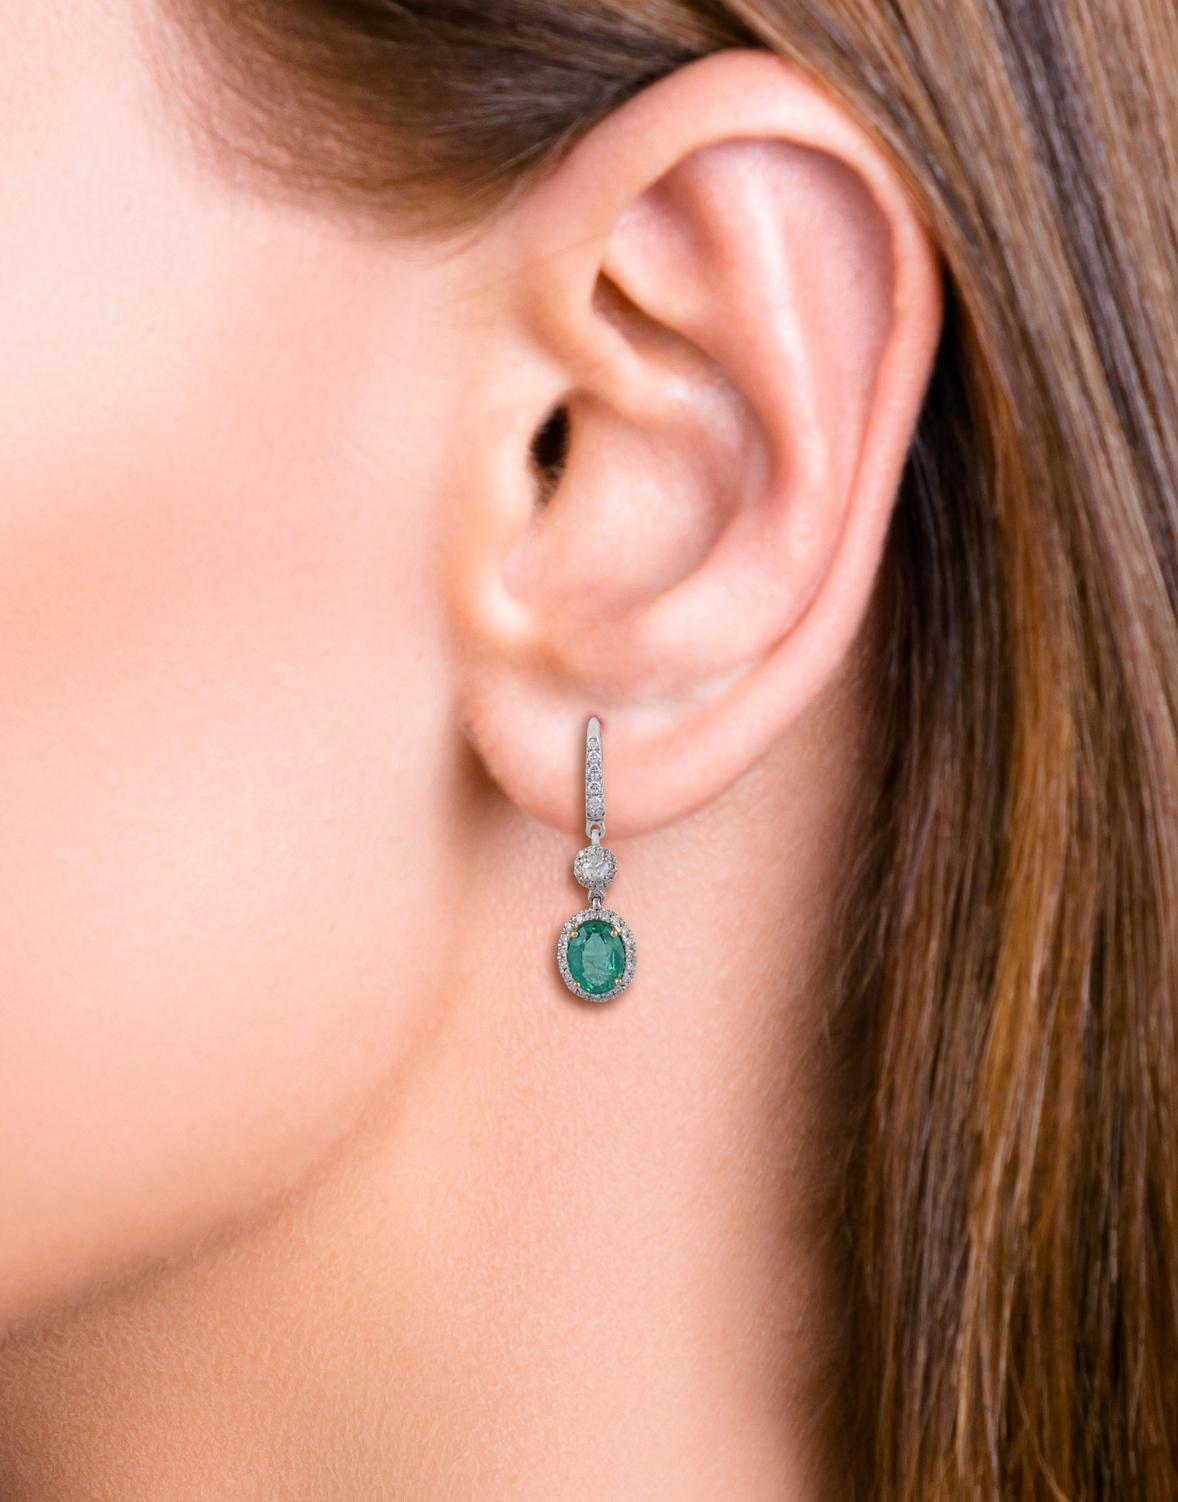 Oval Cut 3.33 Carat  Zambian Emerald and Diamond Earrings Studded in 18 Karat White Gold For Sale